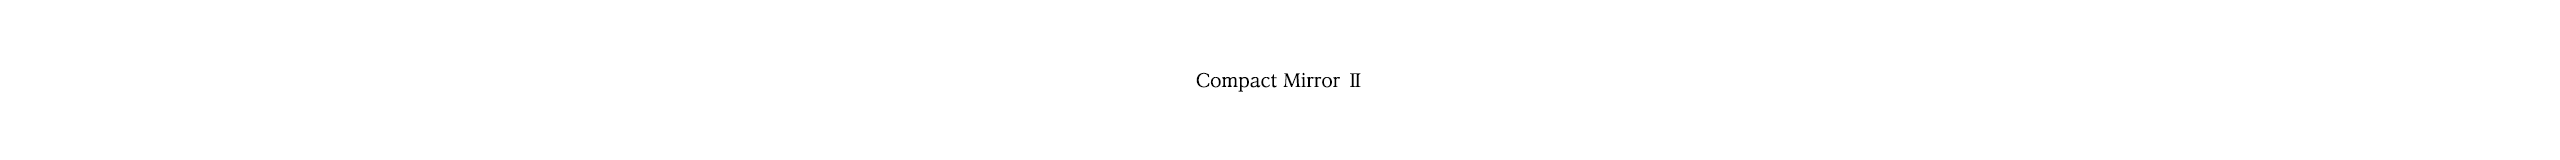 Compact Mirror Ⅱ